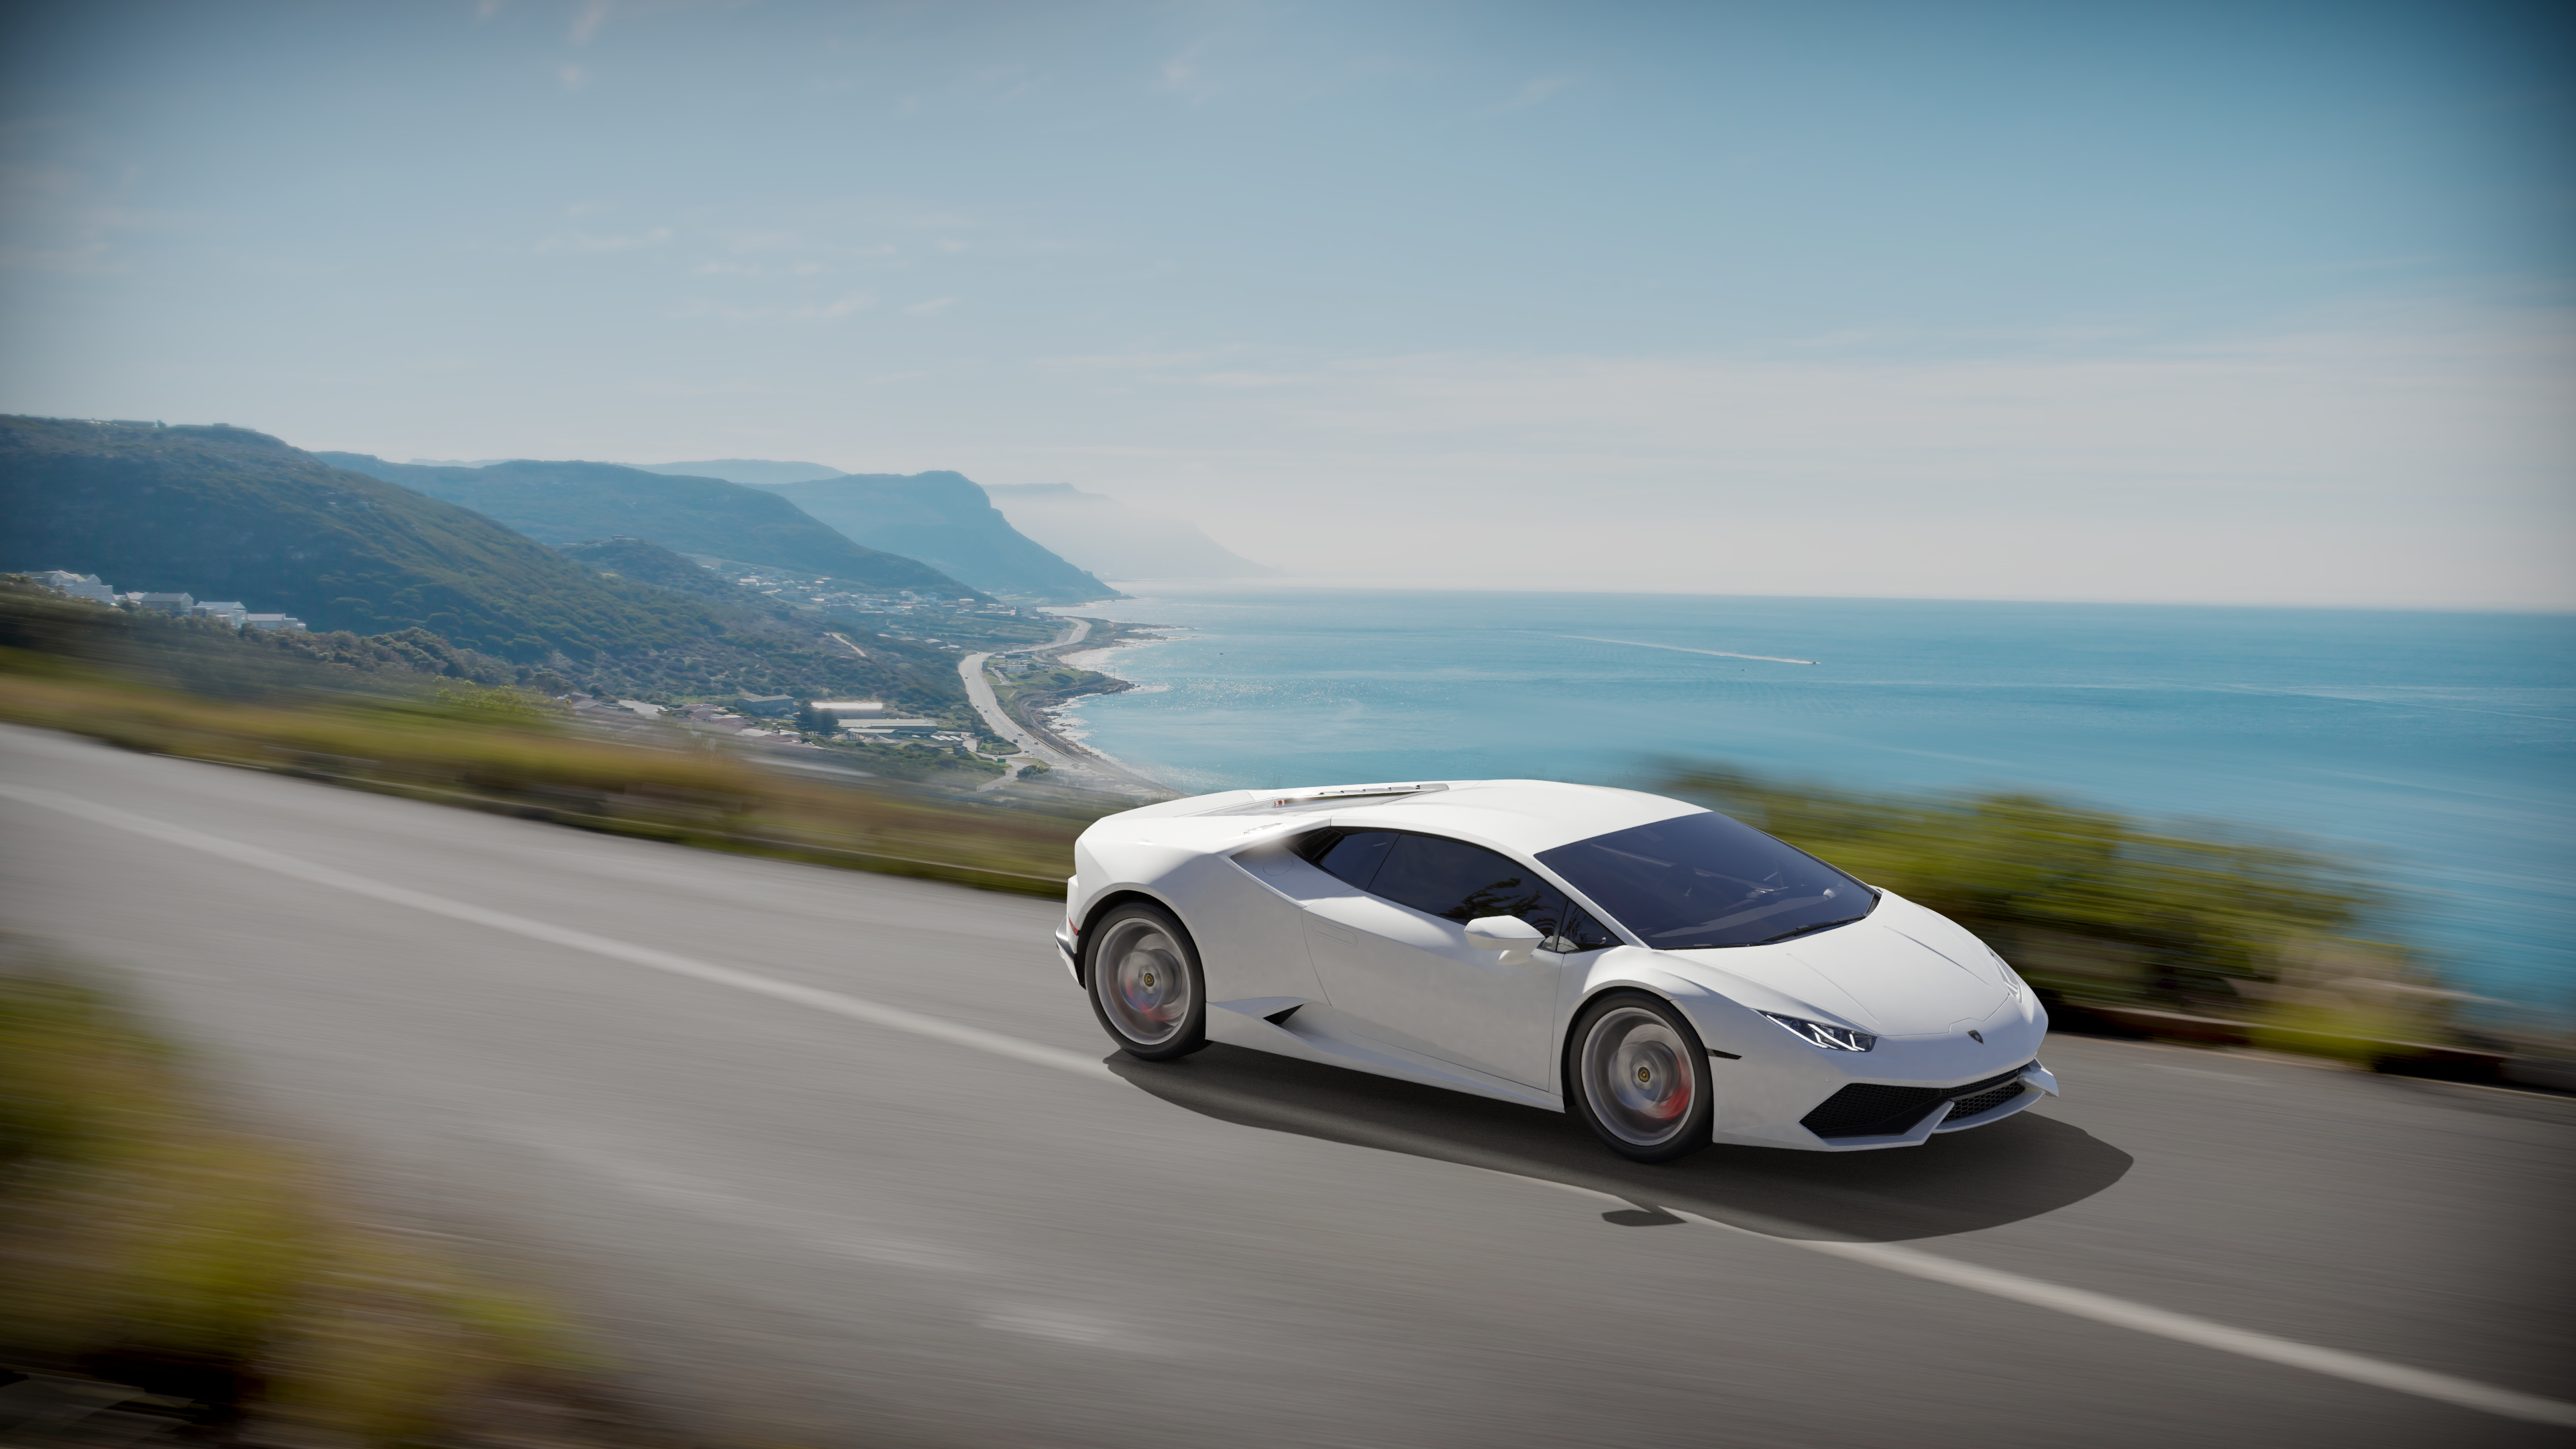 Lamborghini Huracan, Finished projects, Blender Artists community, Creative showcase, 3840x2160 4K Desktop